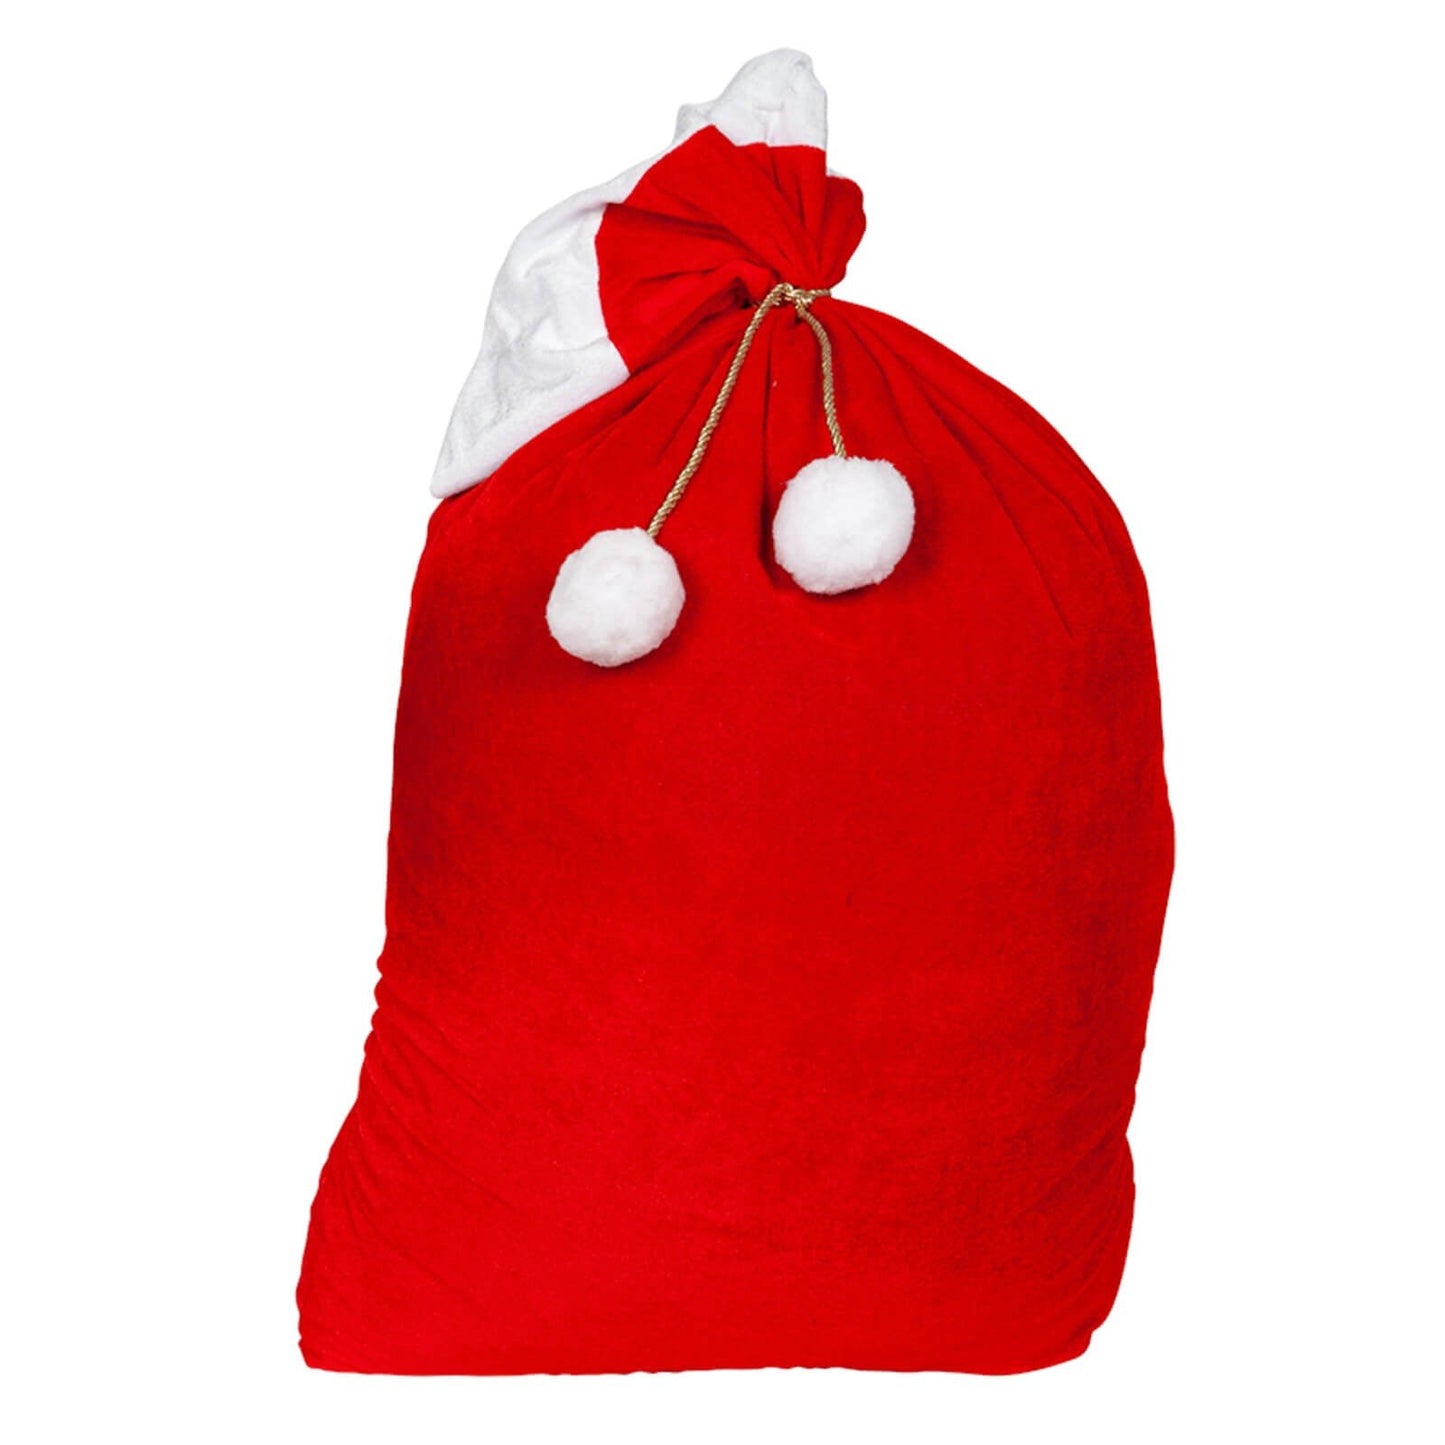 Mr Crimbo Santa Sack Deluxe Red Velvet Bag White Pom Poms - MrCrimbo.co.uk -WKDXM-4674 - Large -santa gift